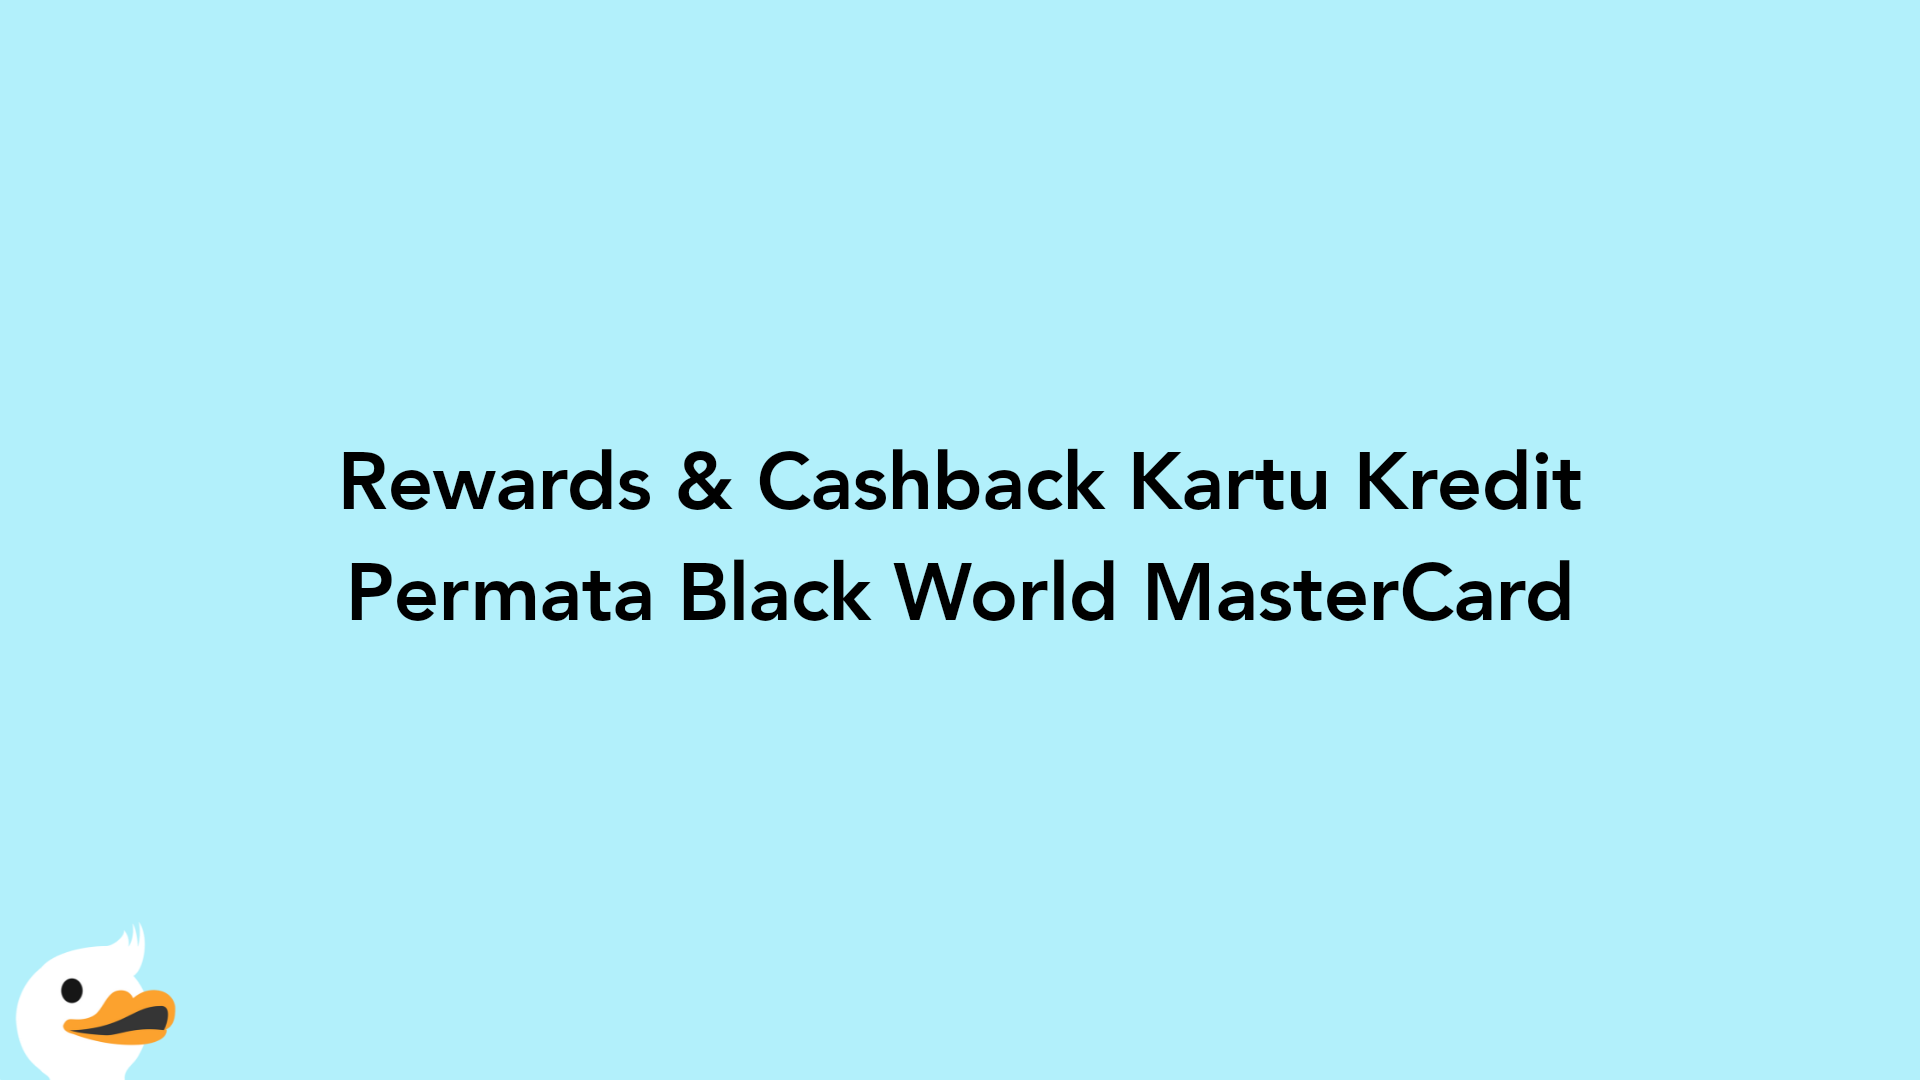 Rewards & Cashback Kartu Kredit Permata Black World MasterCard